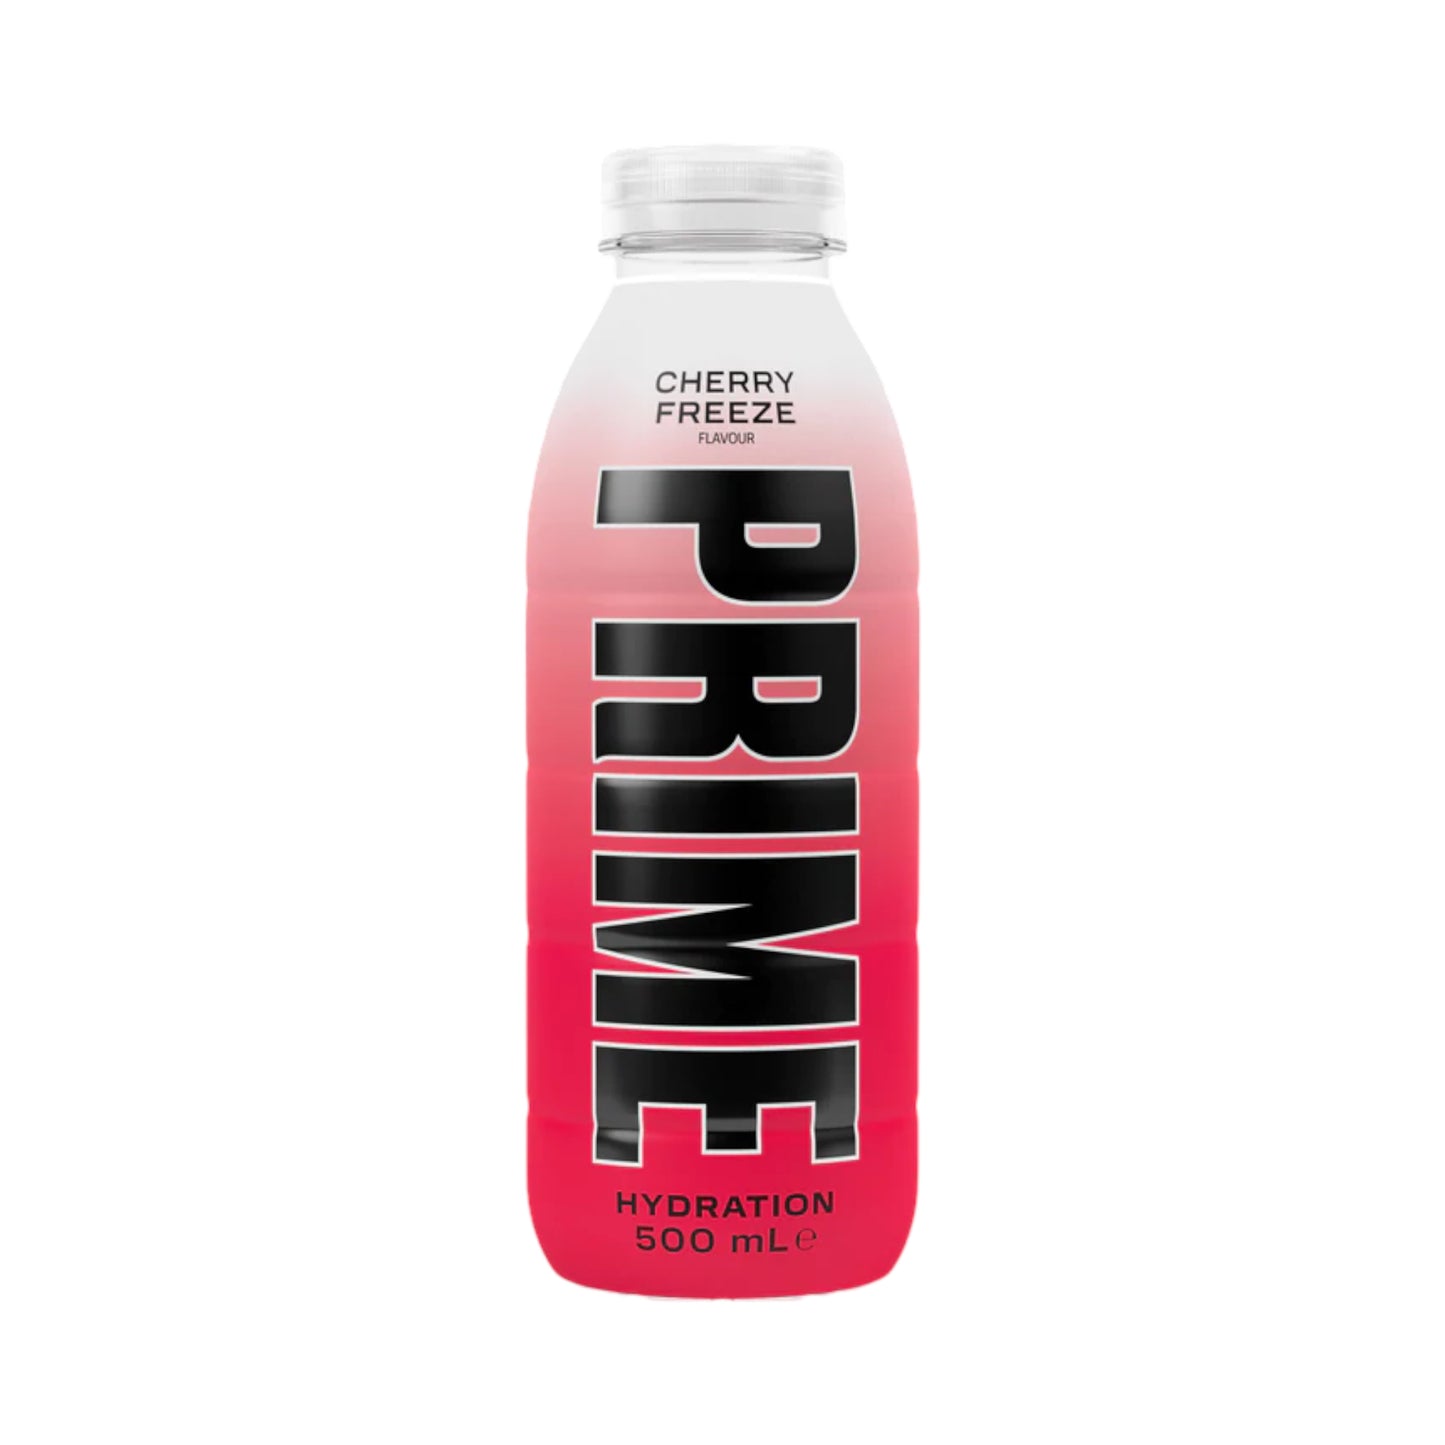 PRIME Hydration Cherry Freeze - 500ml (UK VERSION)